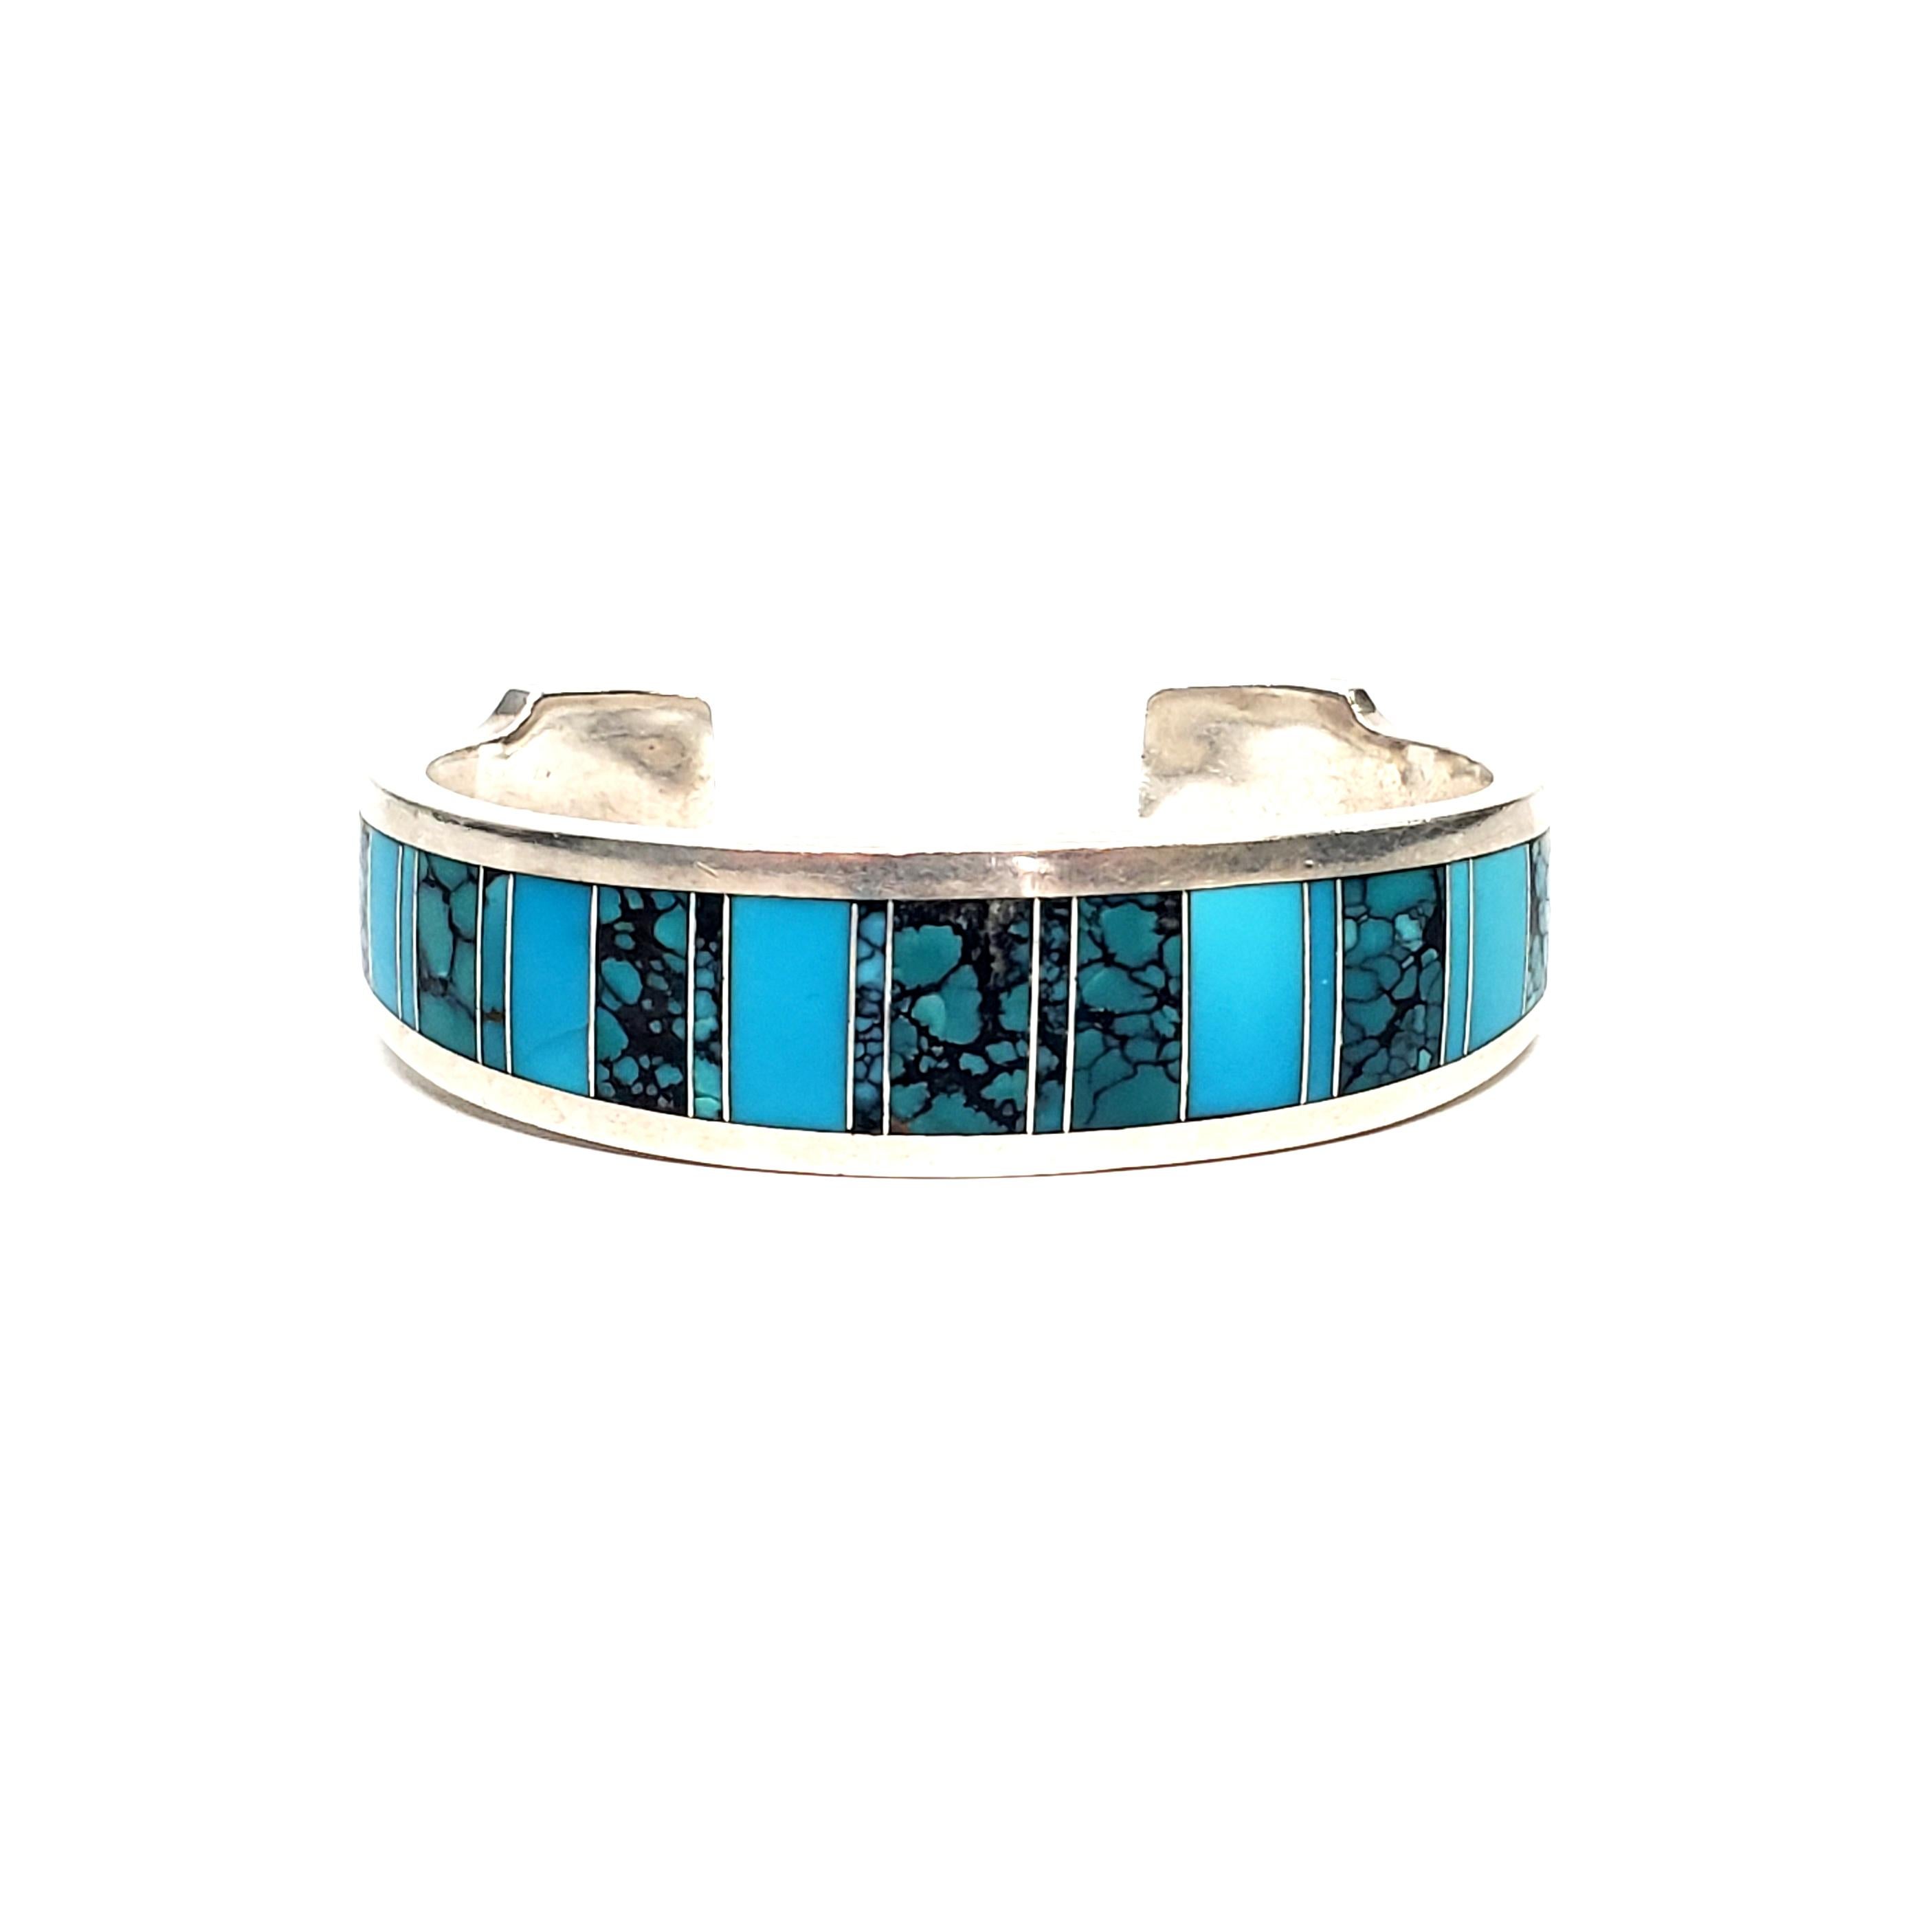 inlaid turquoise bracelet